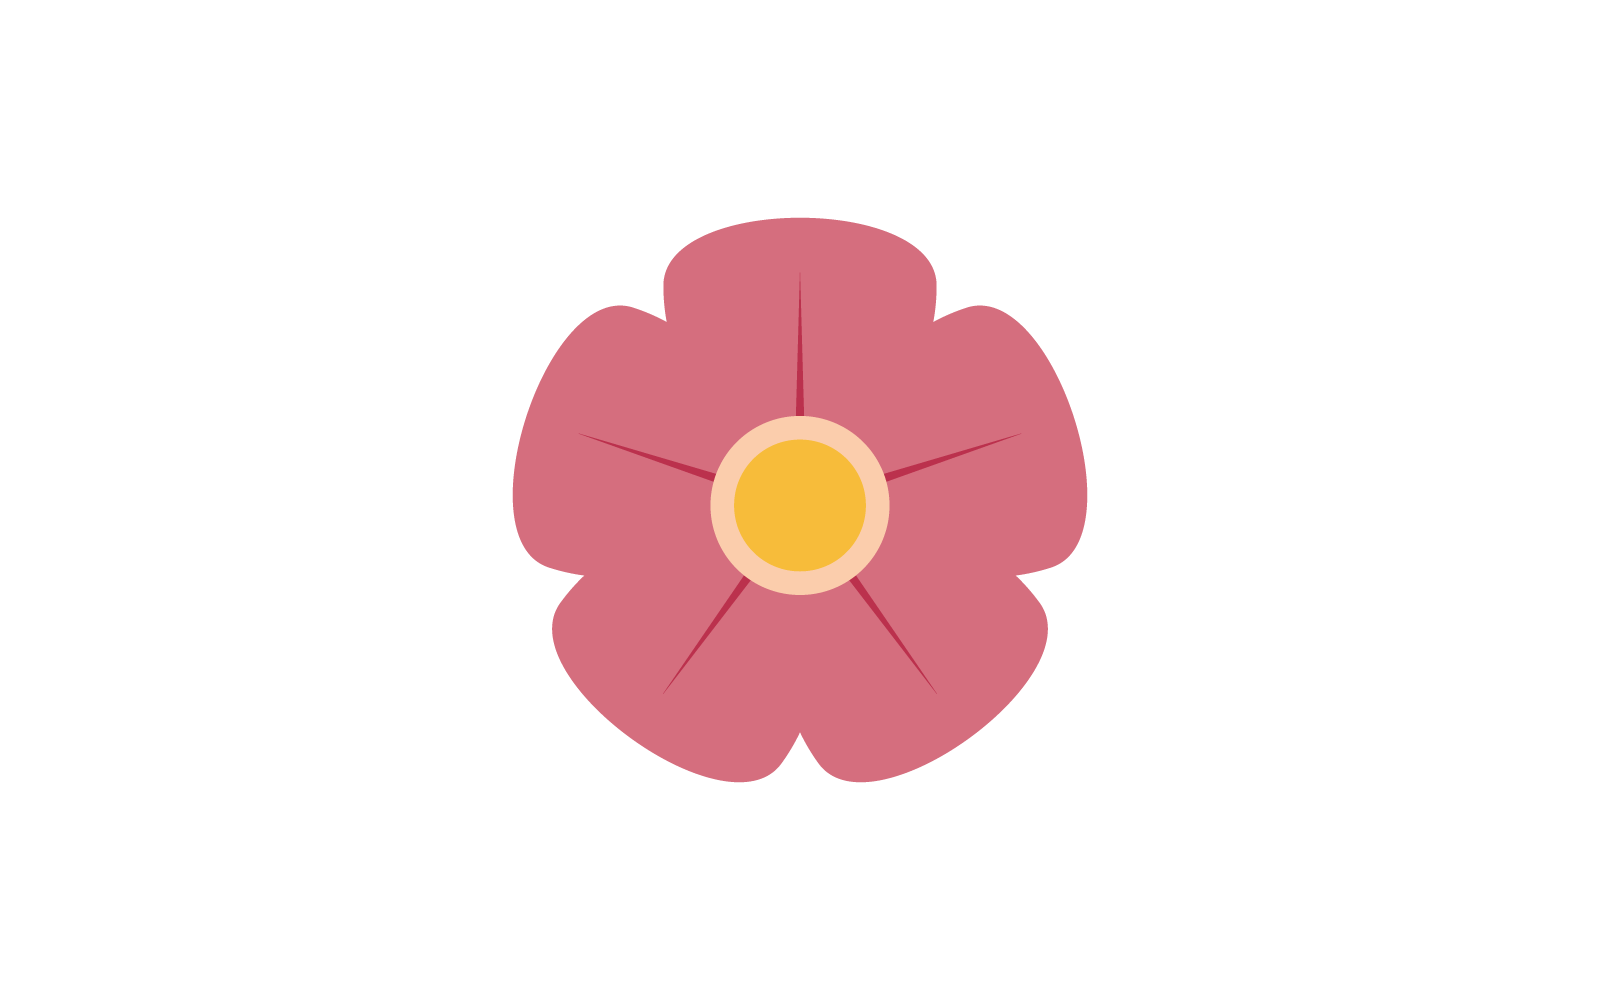 Шаблон иллюстрации логотипа цветка плюмерии